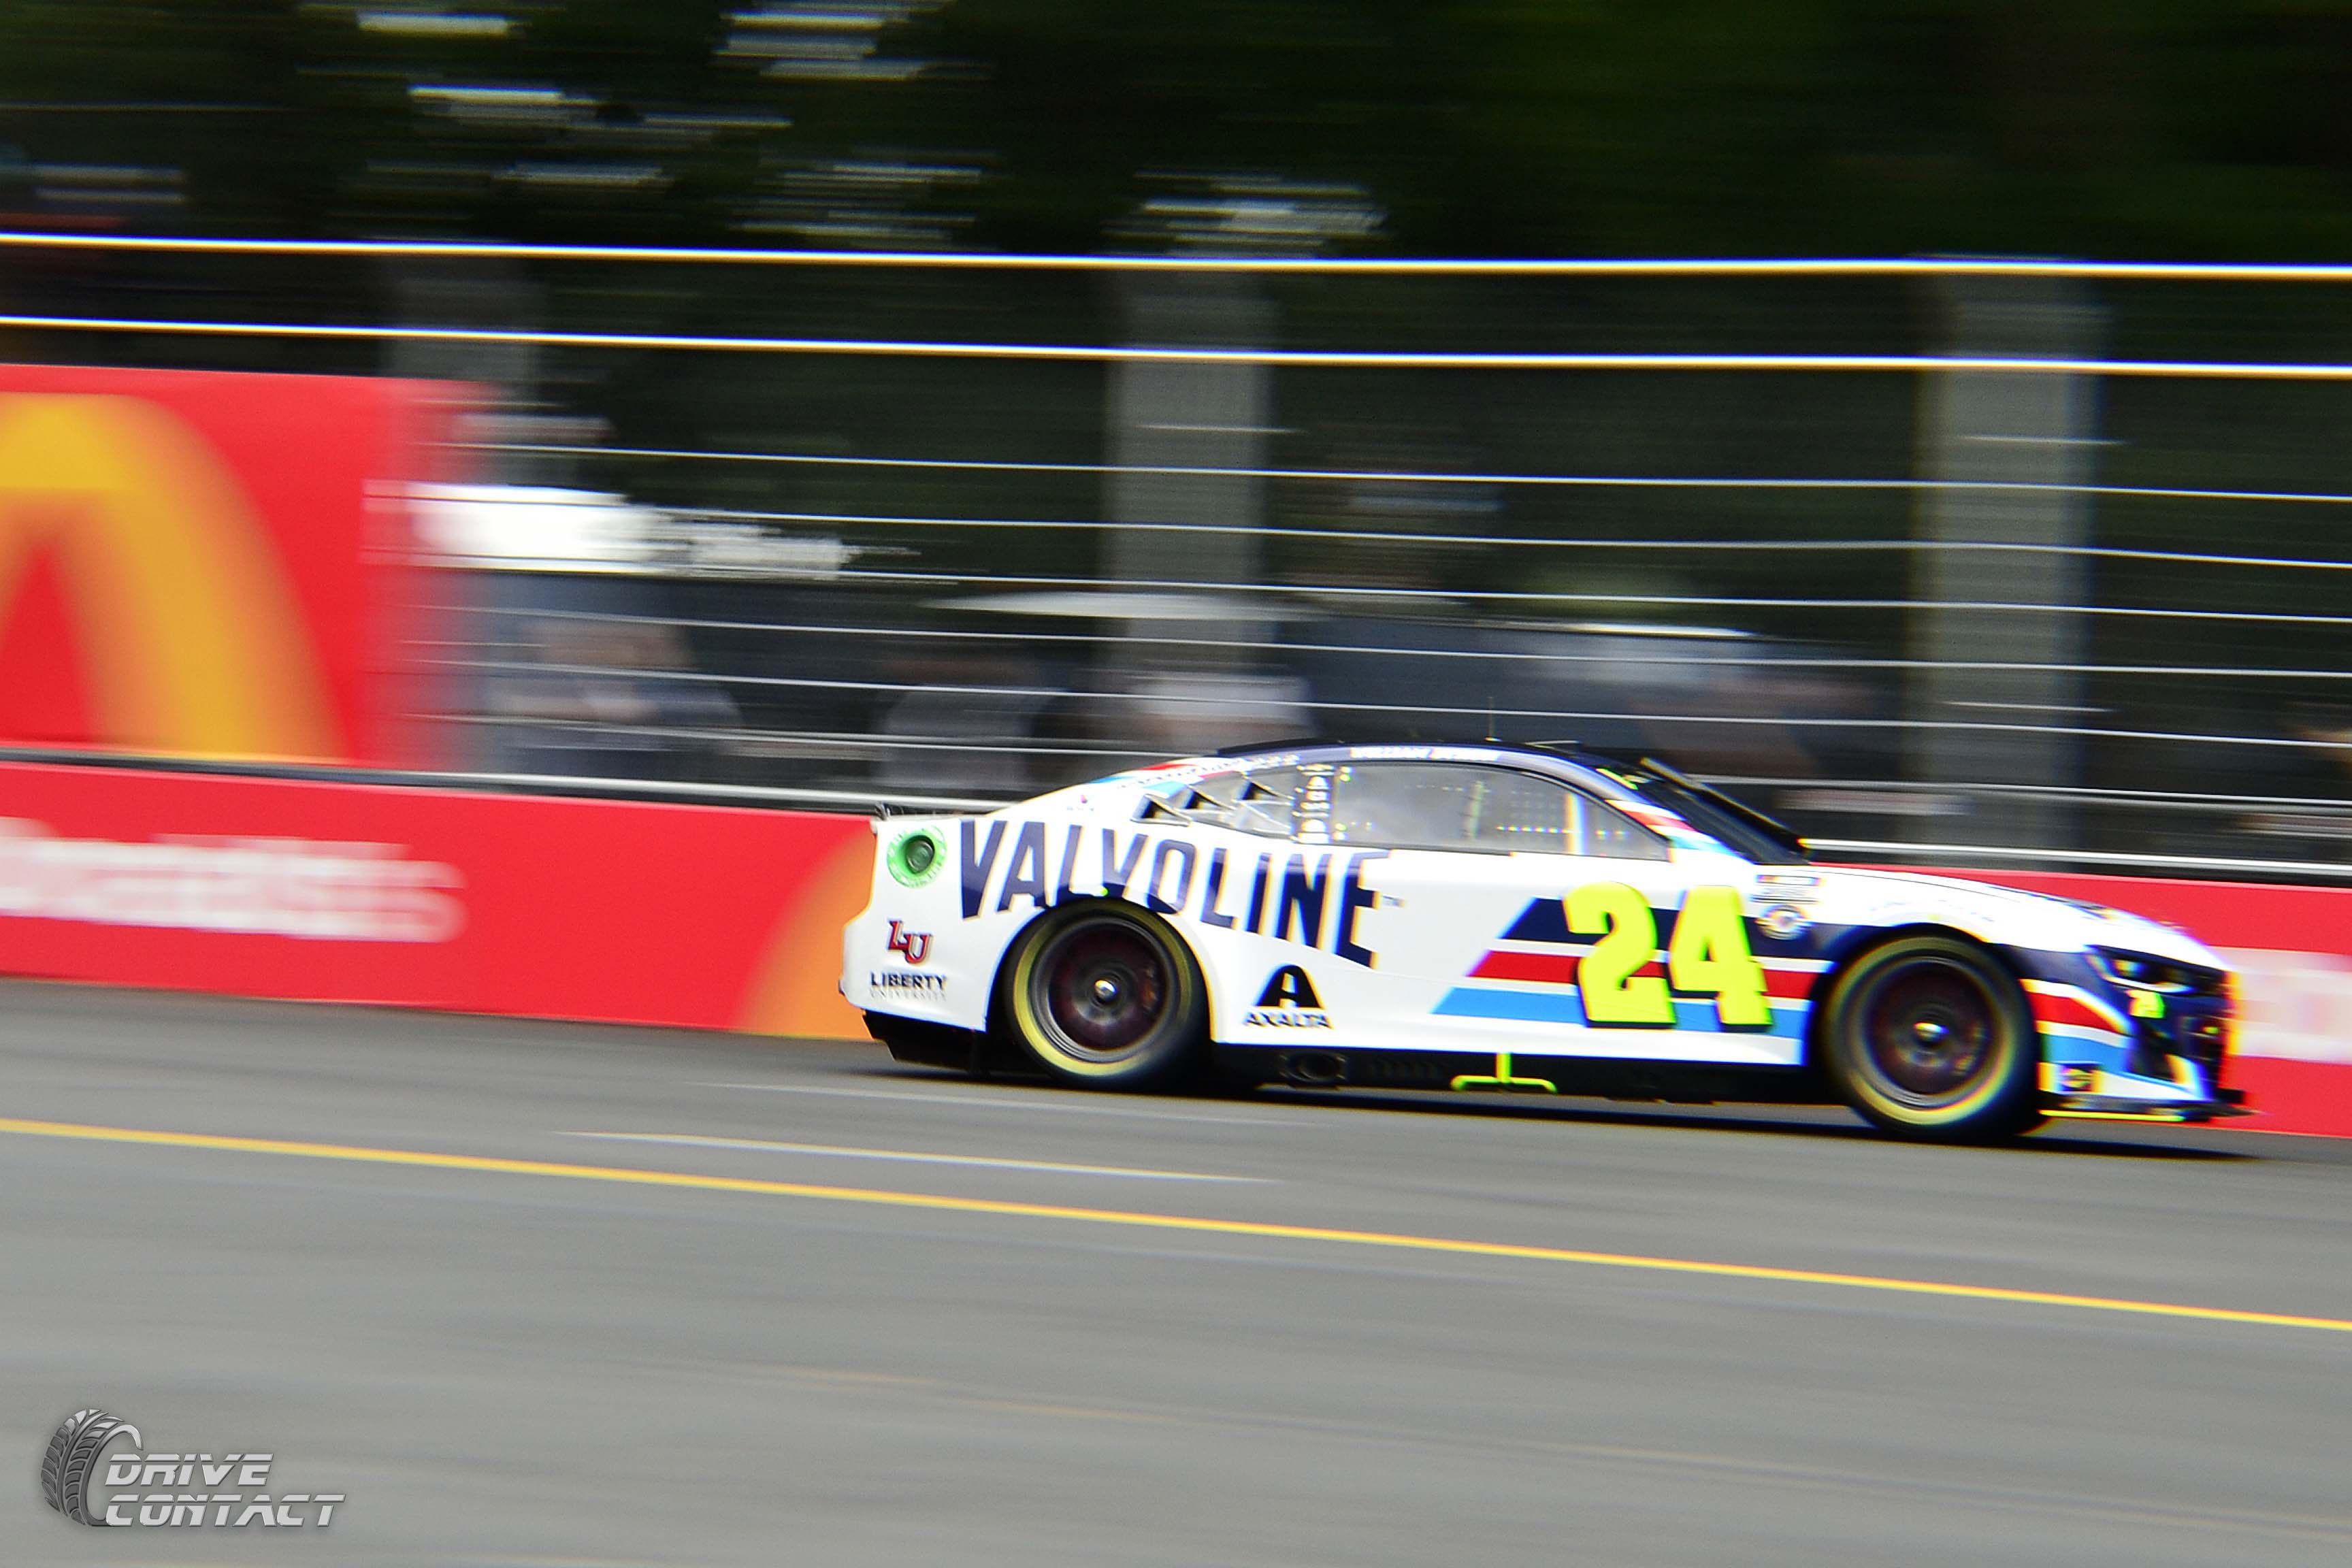 William Byron will drive the No. 24 Valvoline Chevrolet